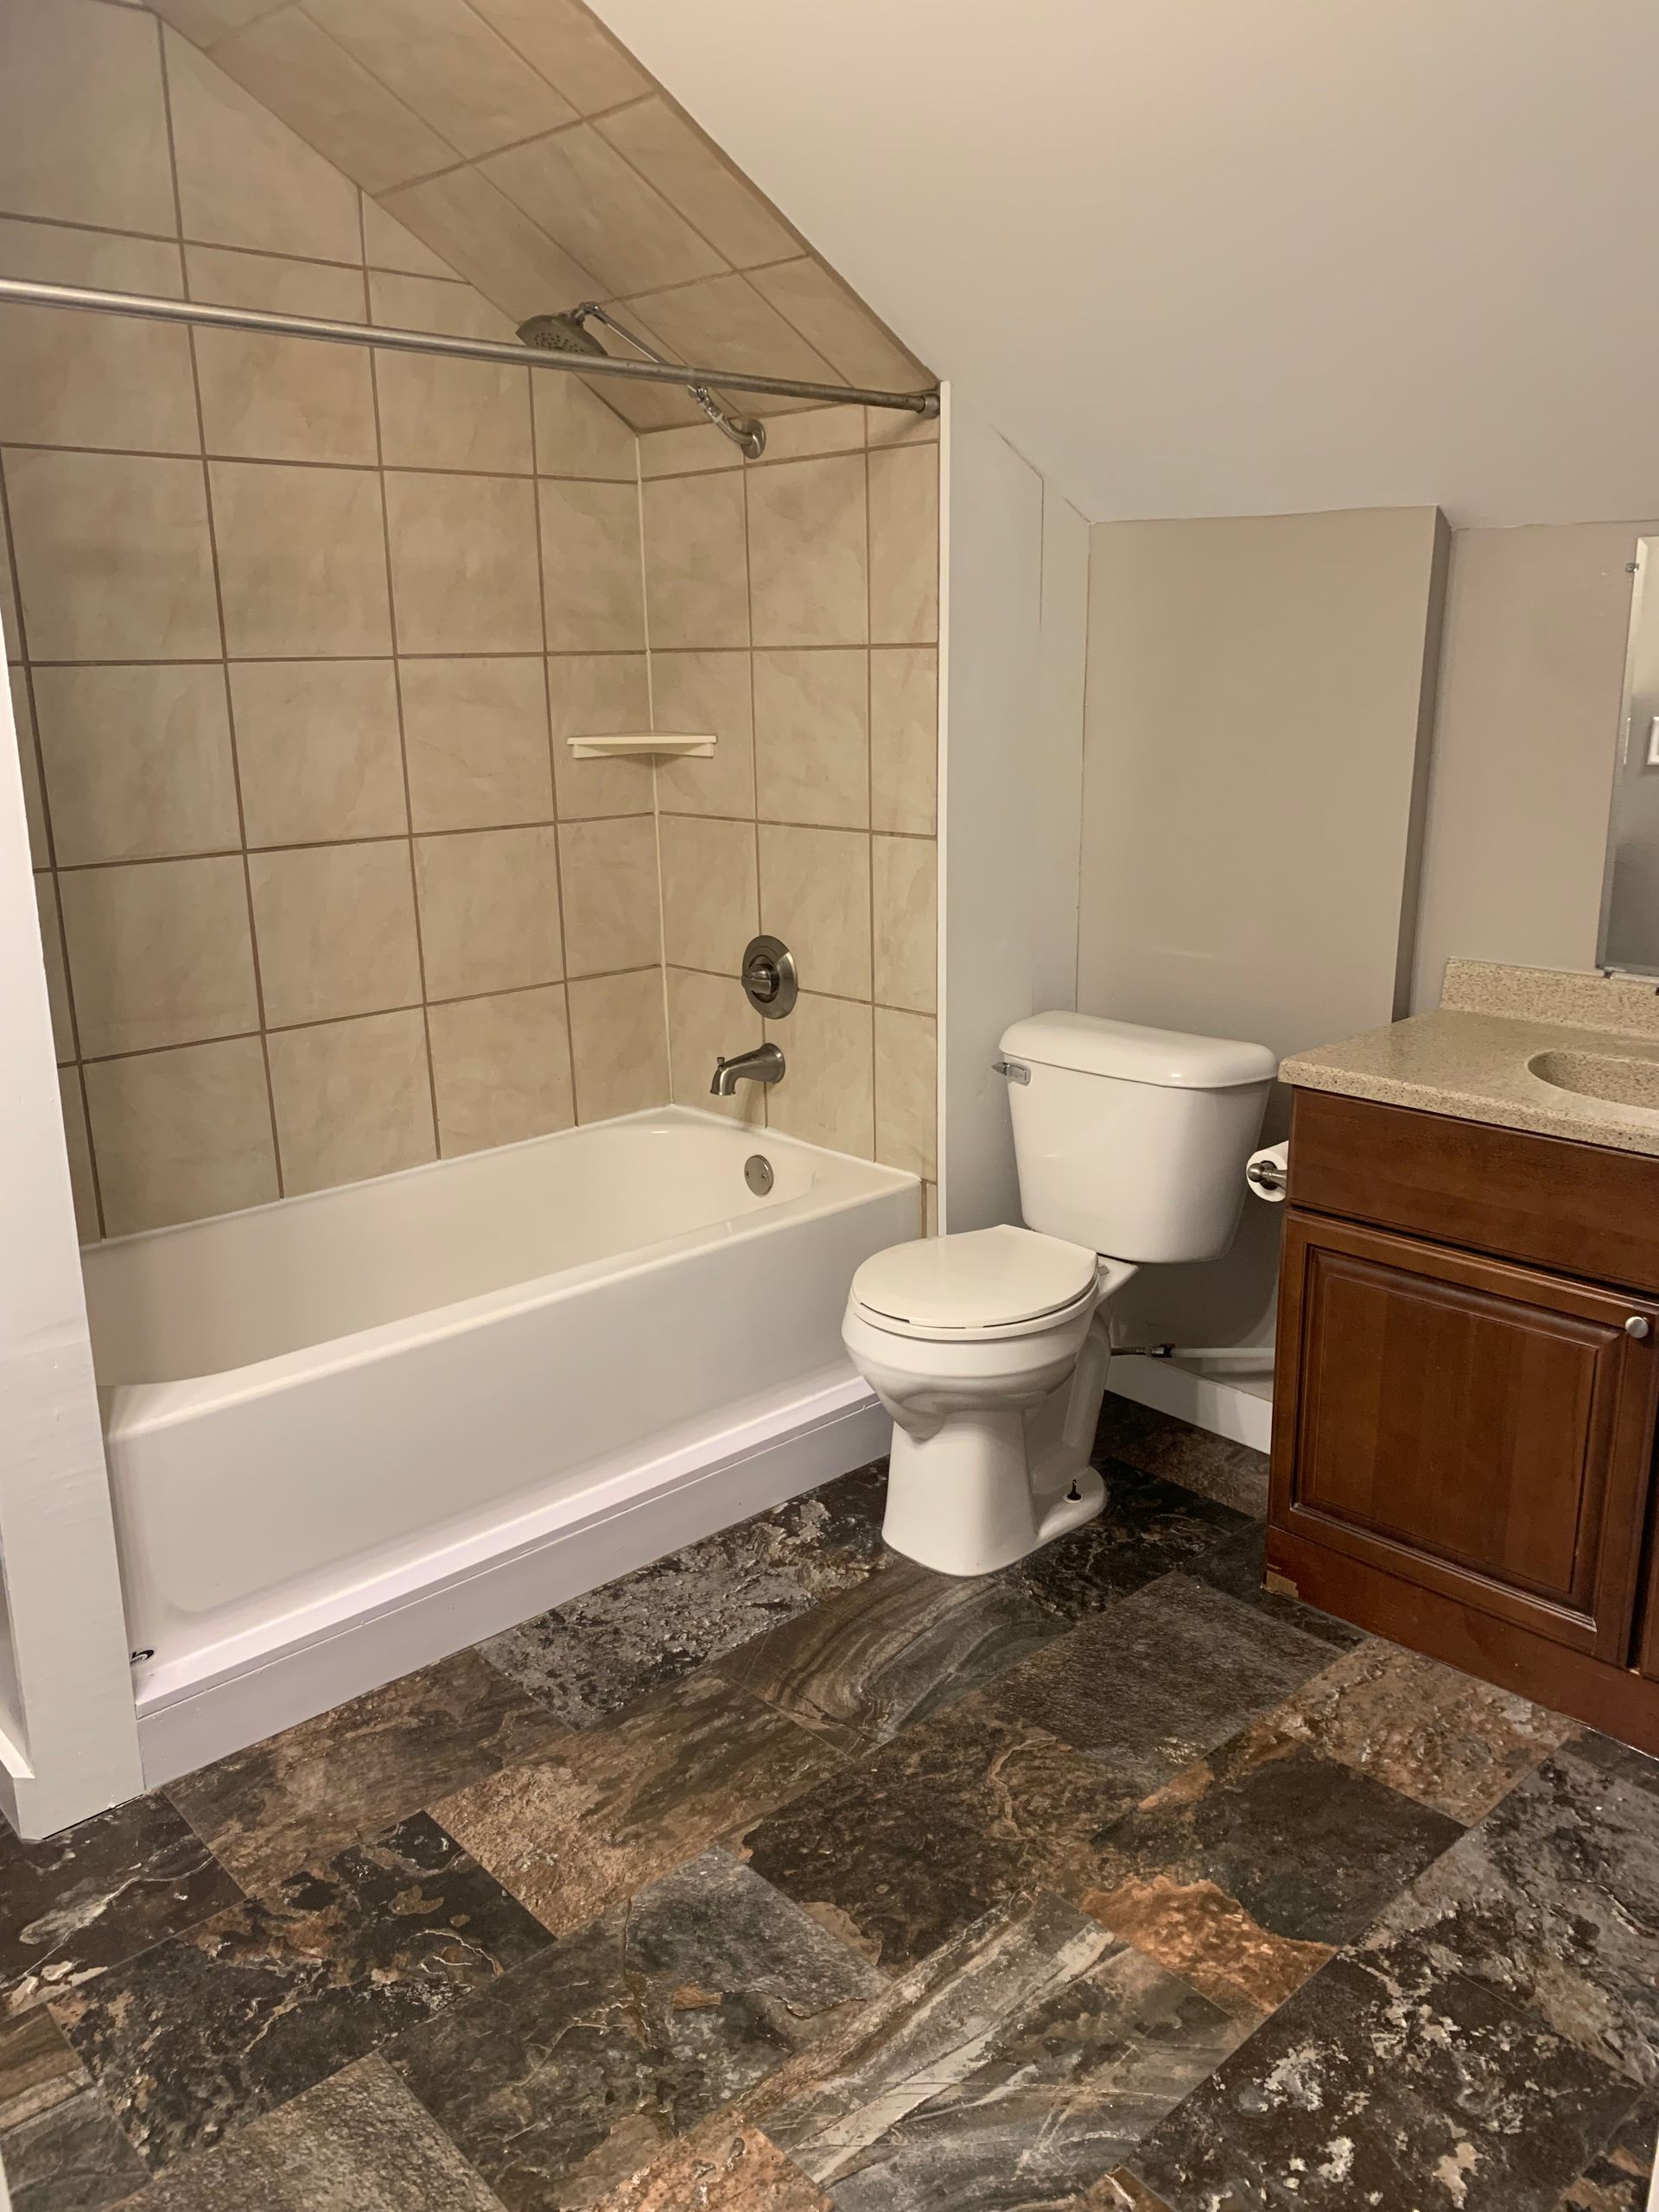 A bathroom with a toilet , sink and bathtub.